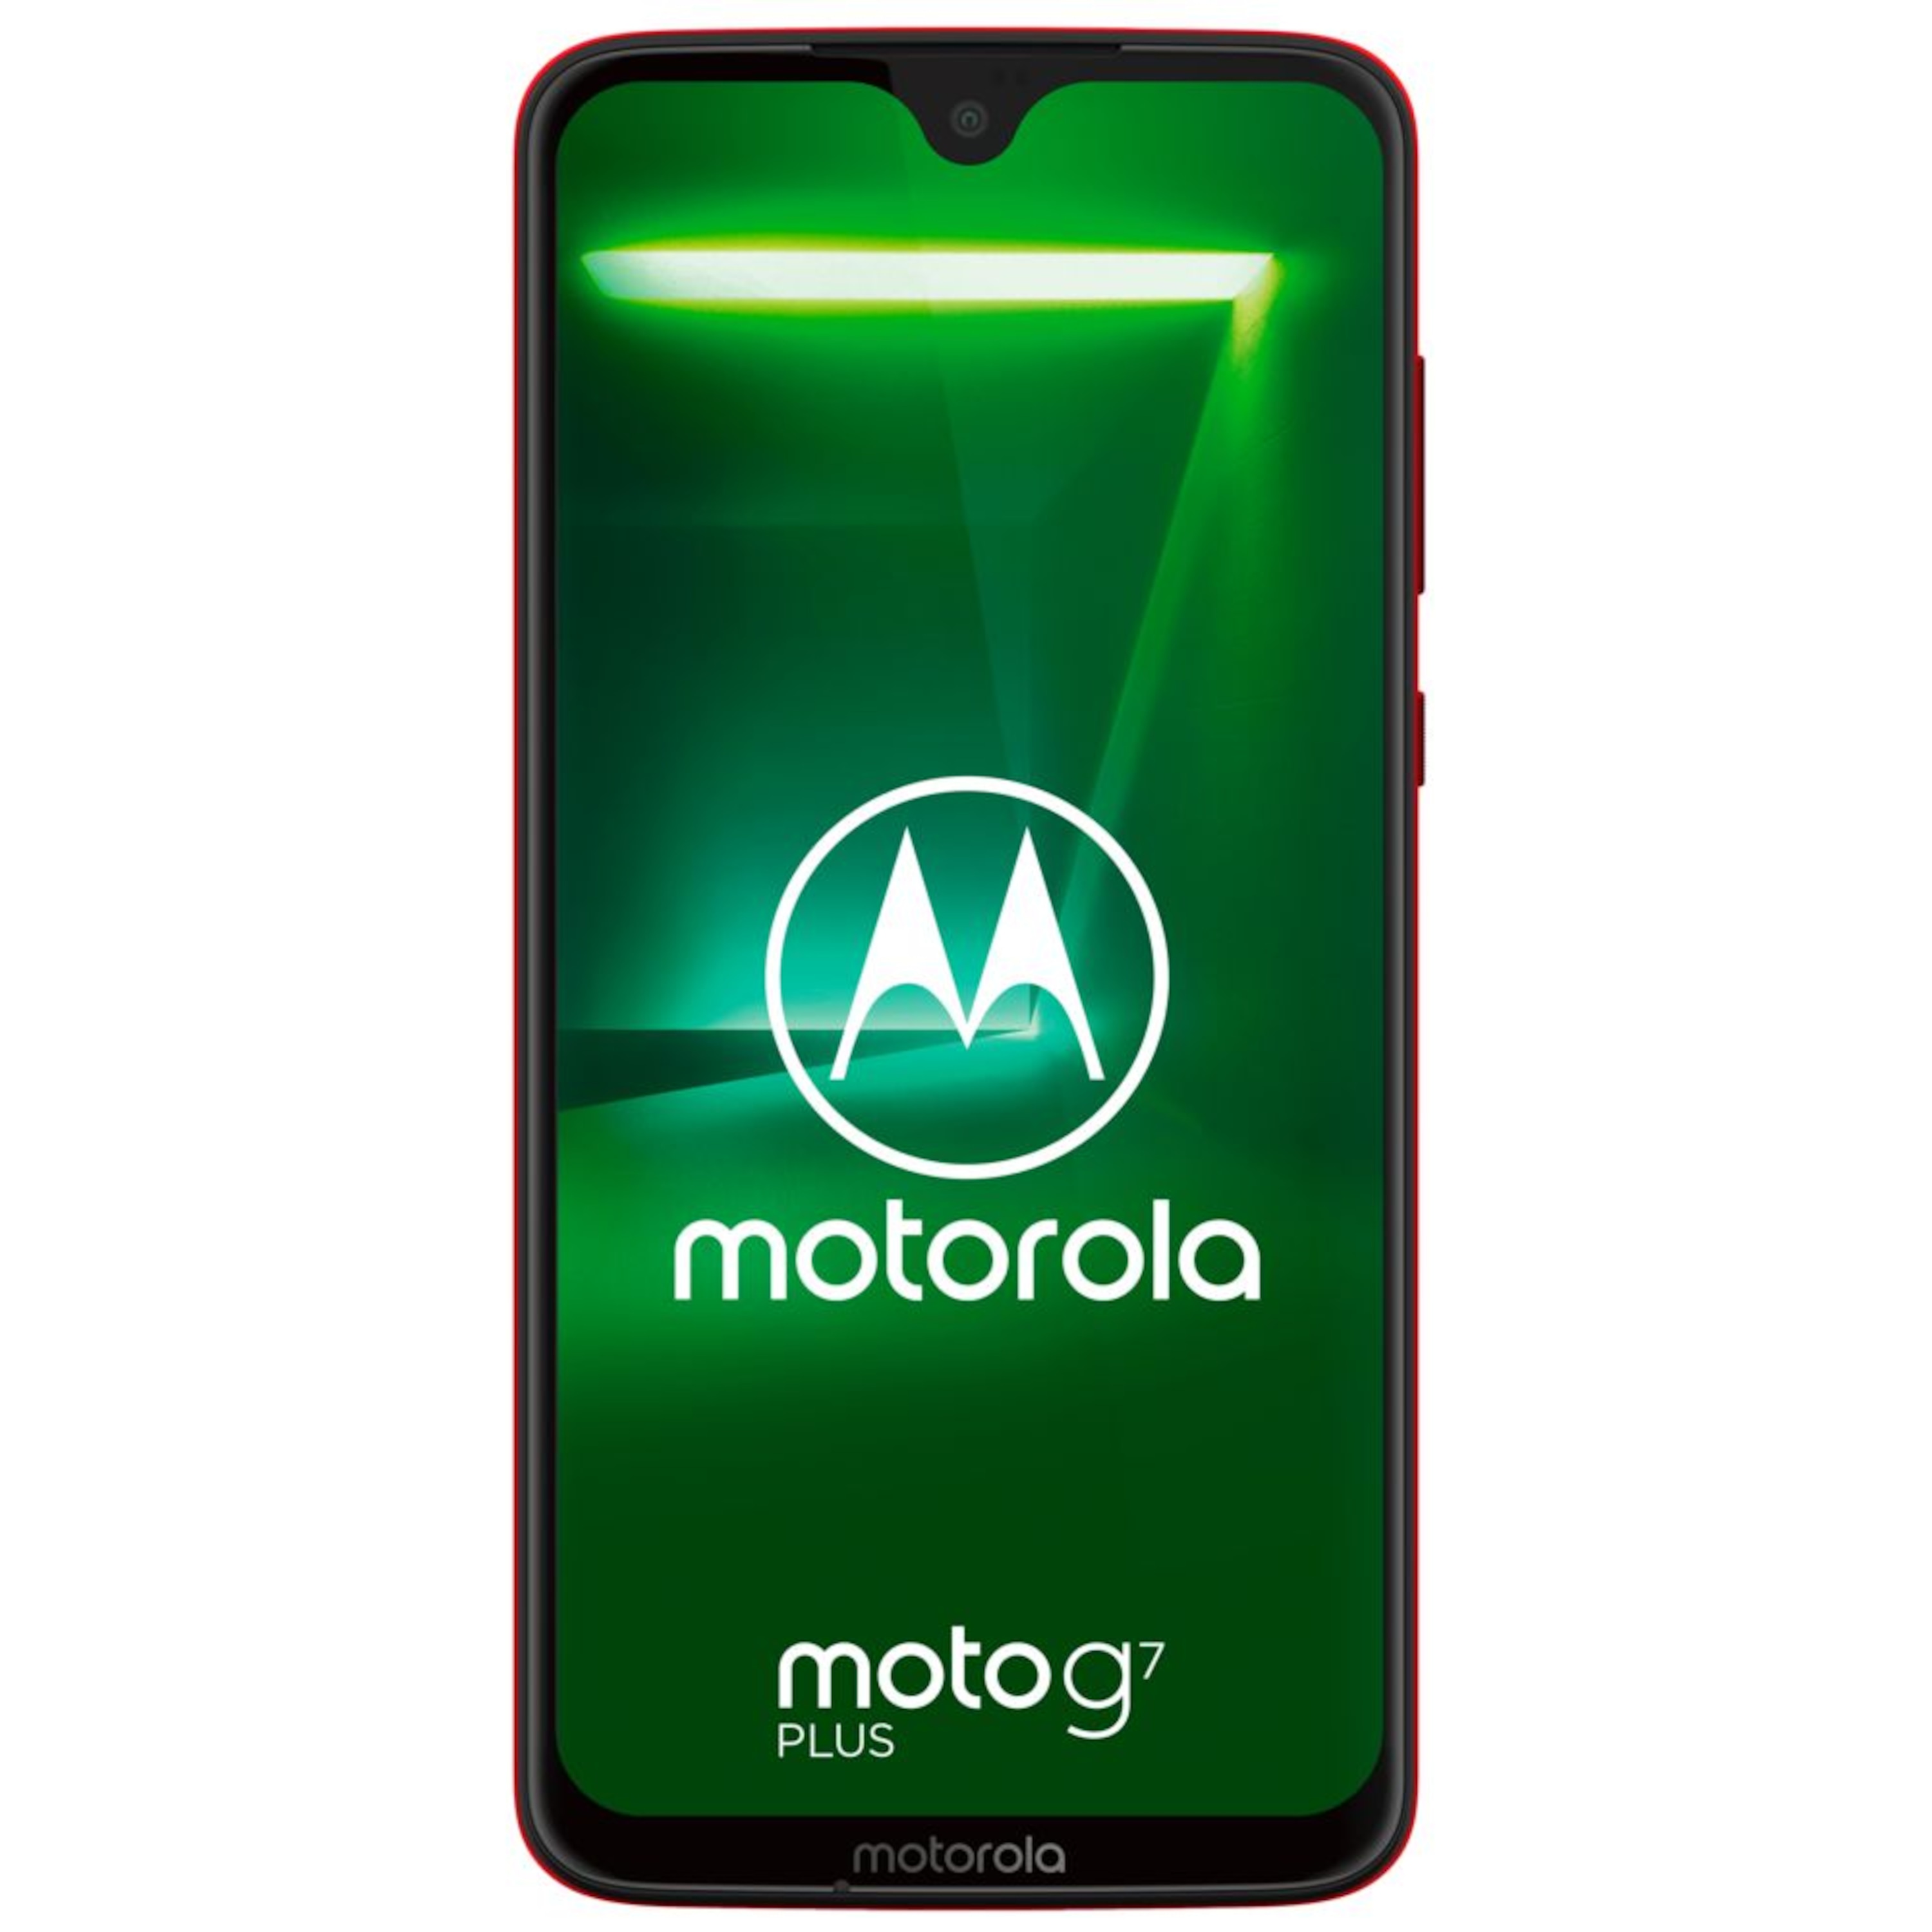 MOTOROLA moto g7 plus Smartphone, 15,84 cm (6,24") Full-HD+ Display, Android™ 9.0, 64 GB Speicher, Octa-Core-Prozessor, Dual-SIM, LTE